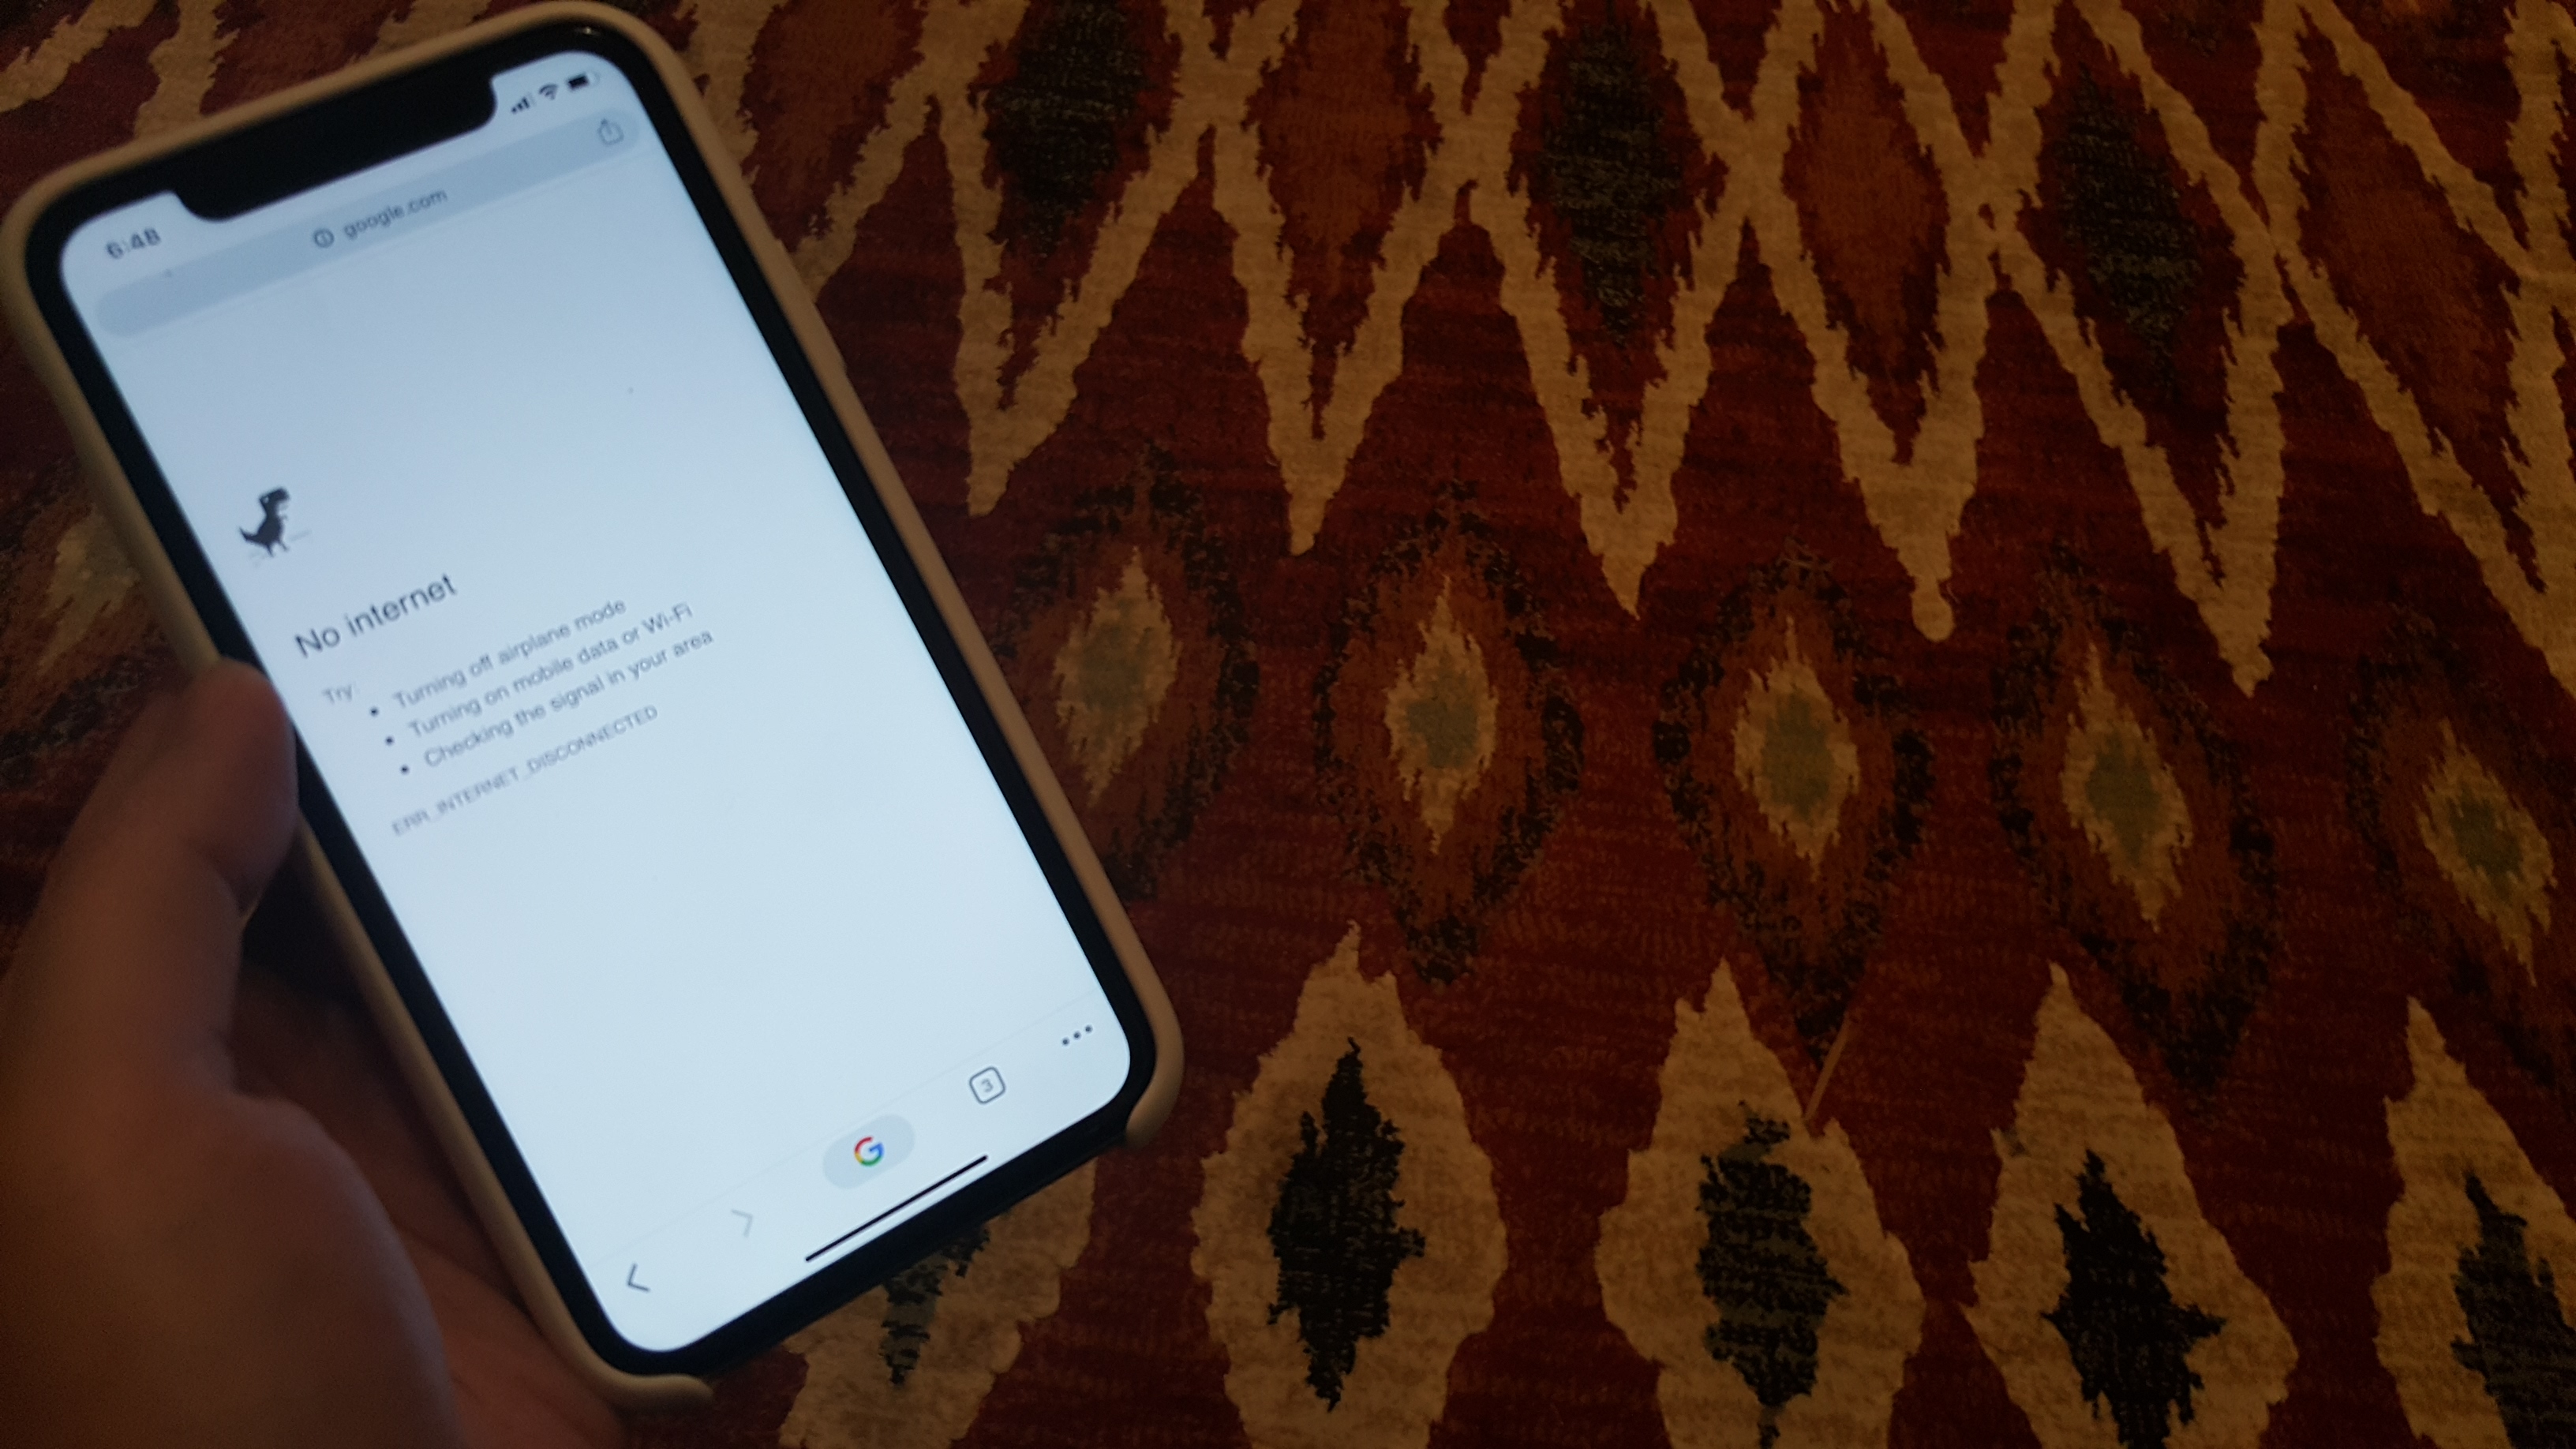 A phone shows Google's "No internet" error screen, indicating an internet shutdown.